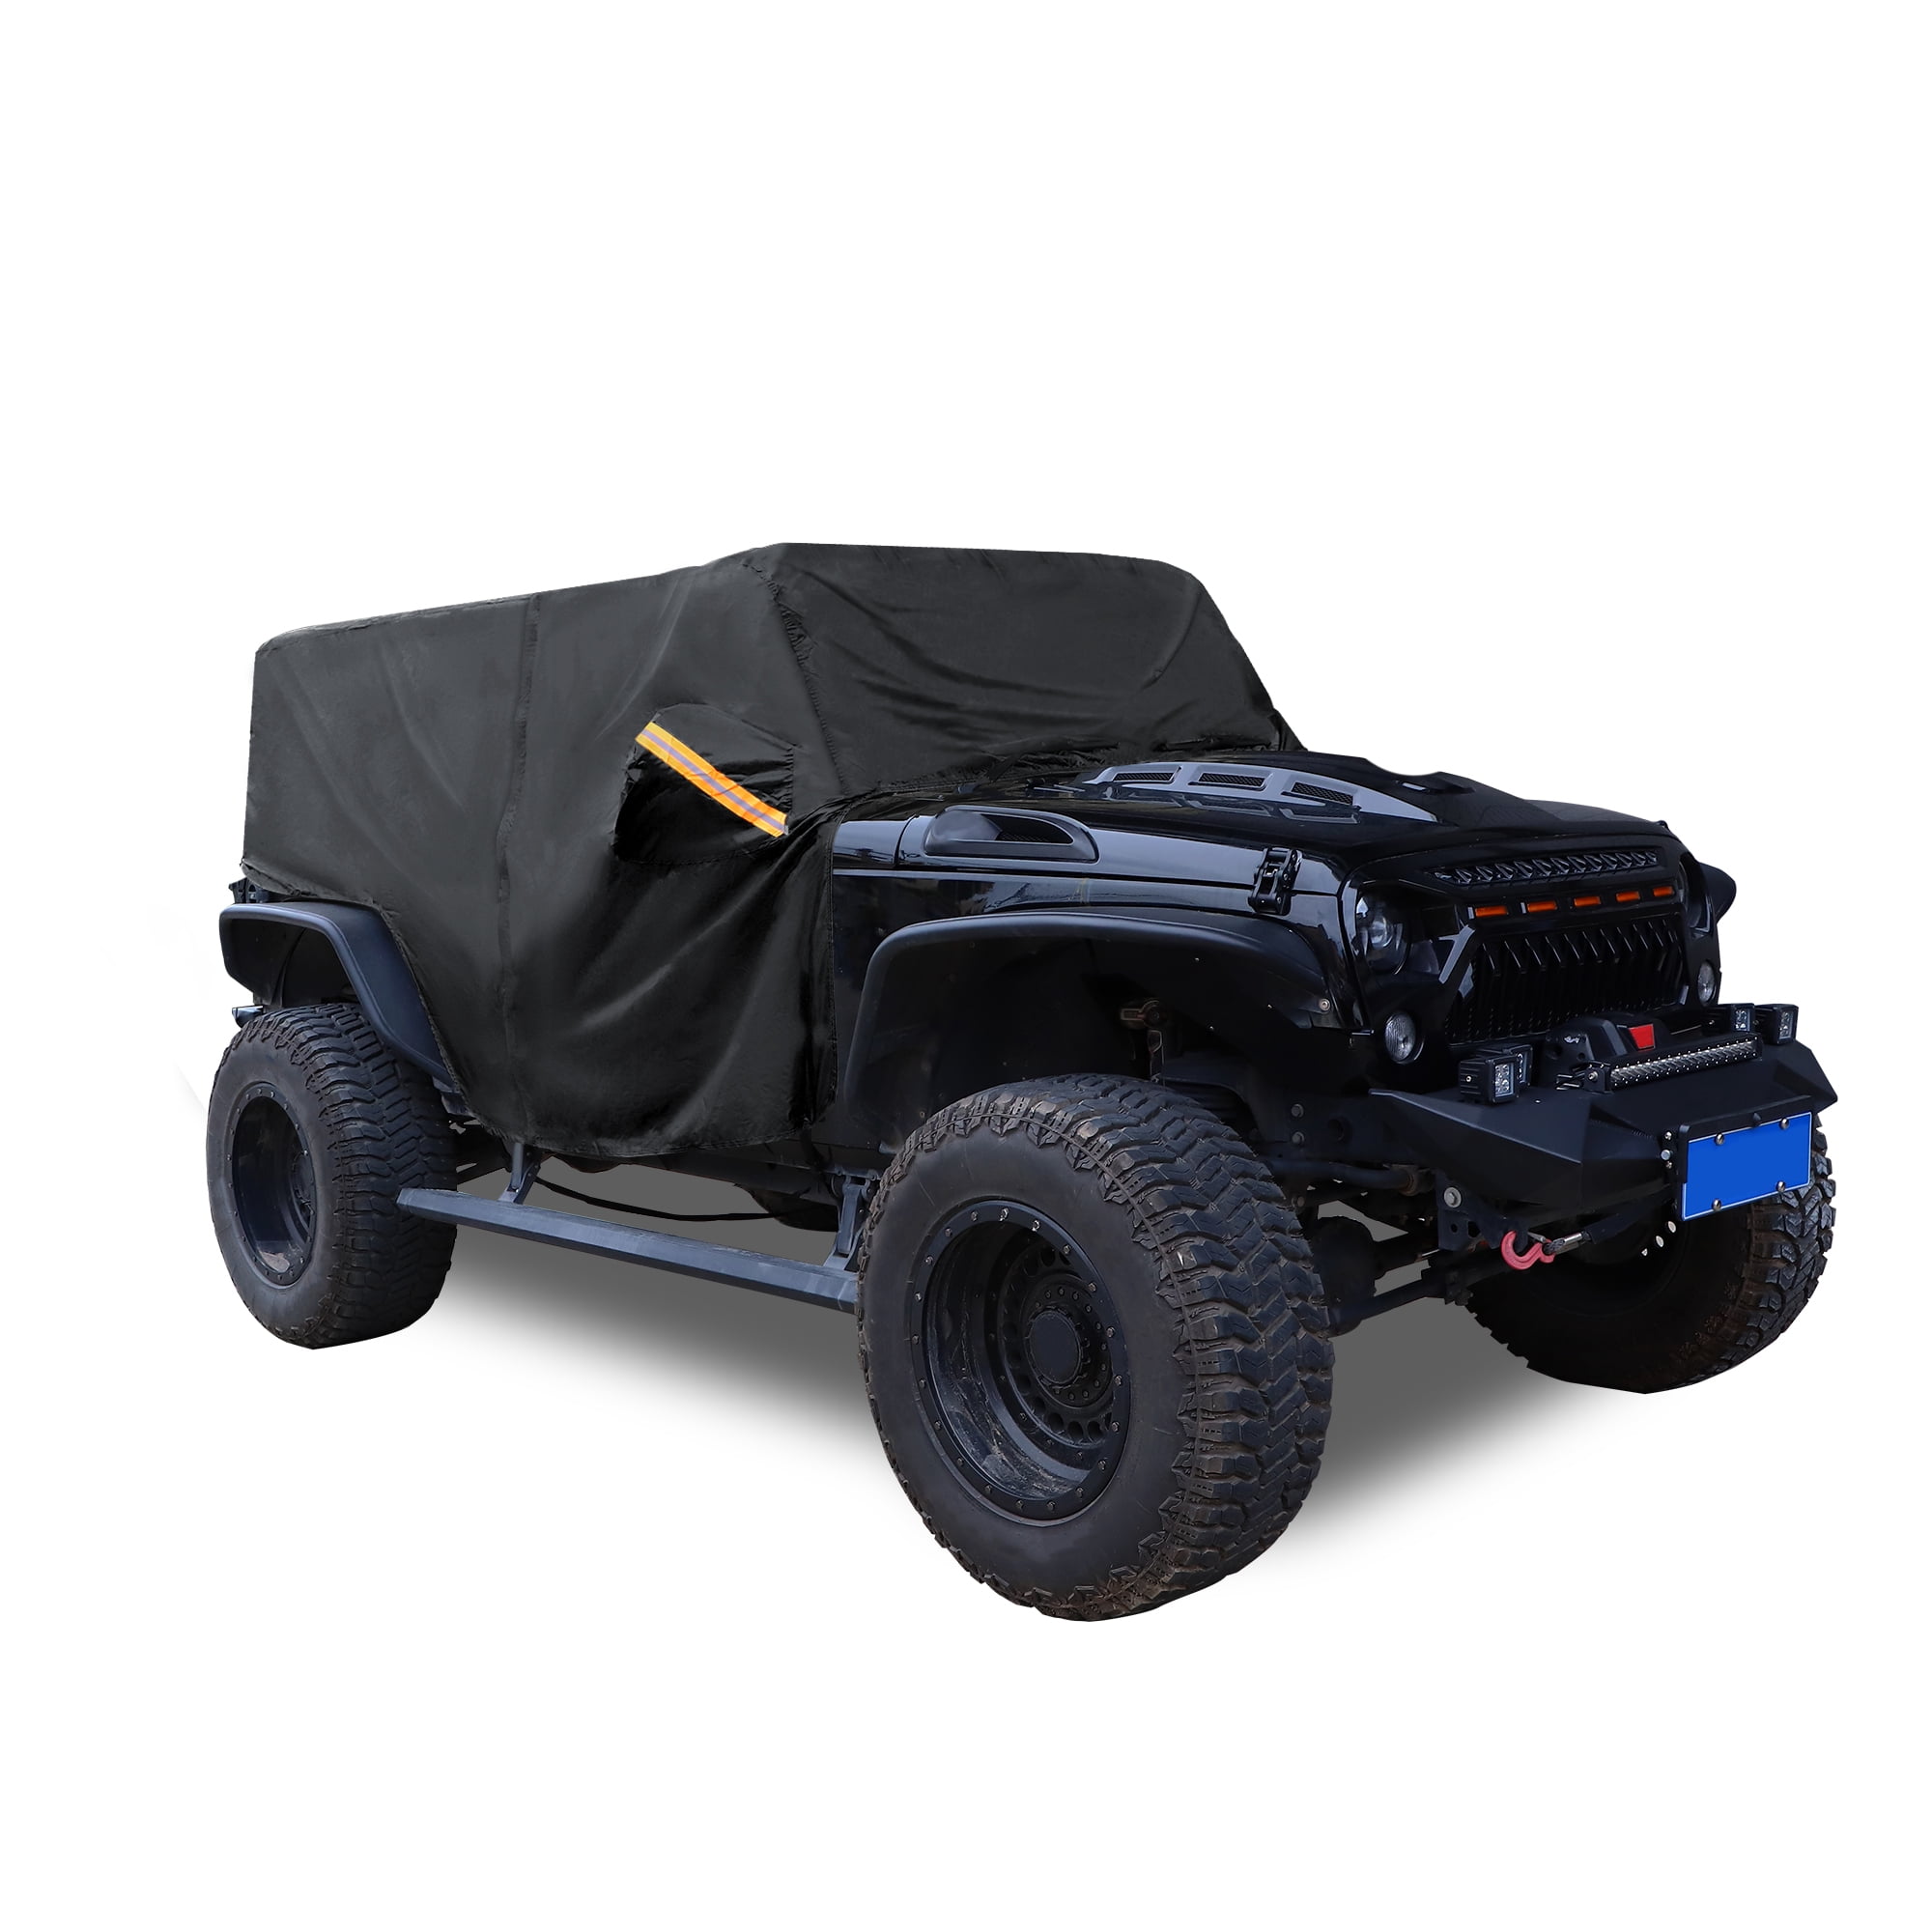 Unique Bargains SUV Cab Car Cover for Jeep Wrangler JK JL Hardtop 4 Door  07-21 Sun Protection 210D Oxford Zipper Black 